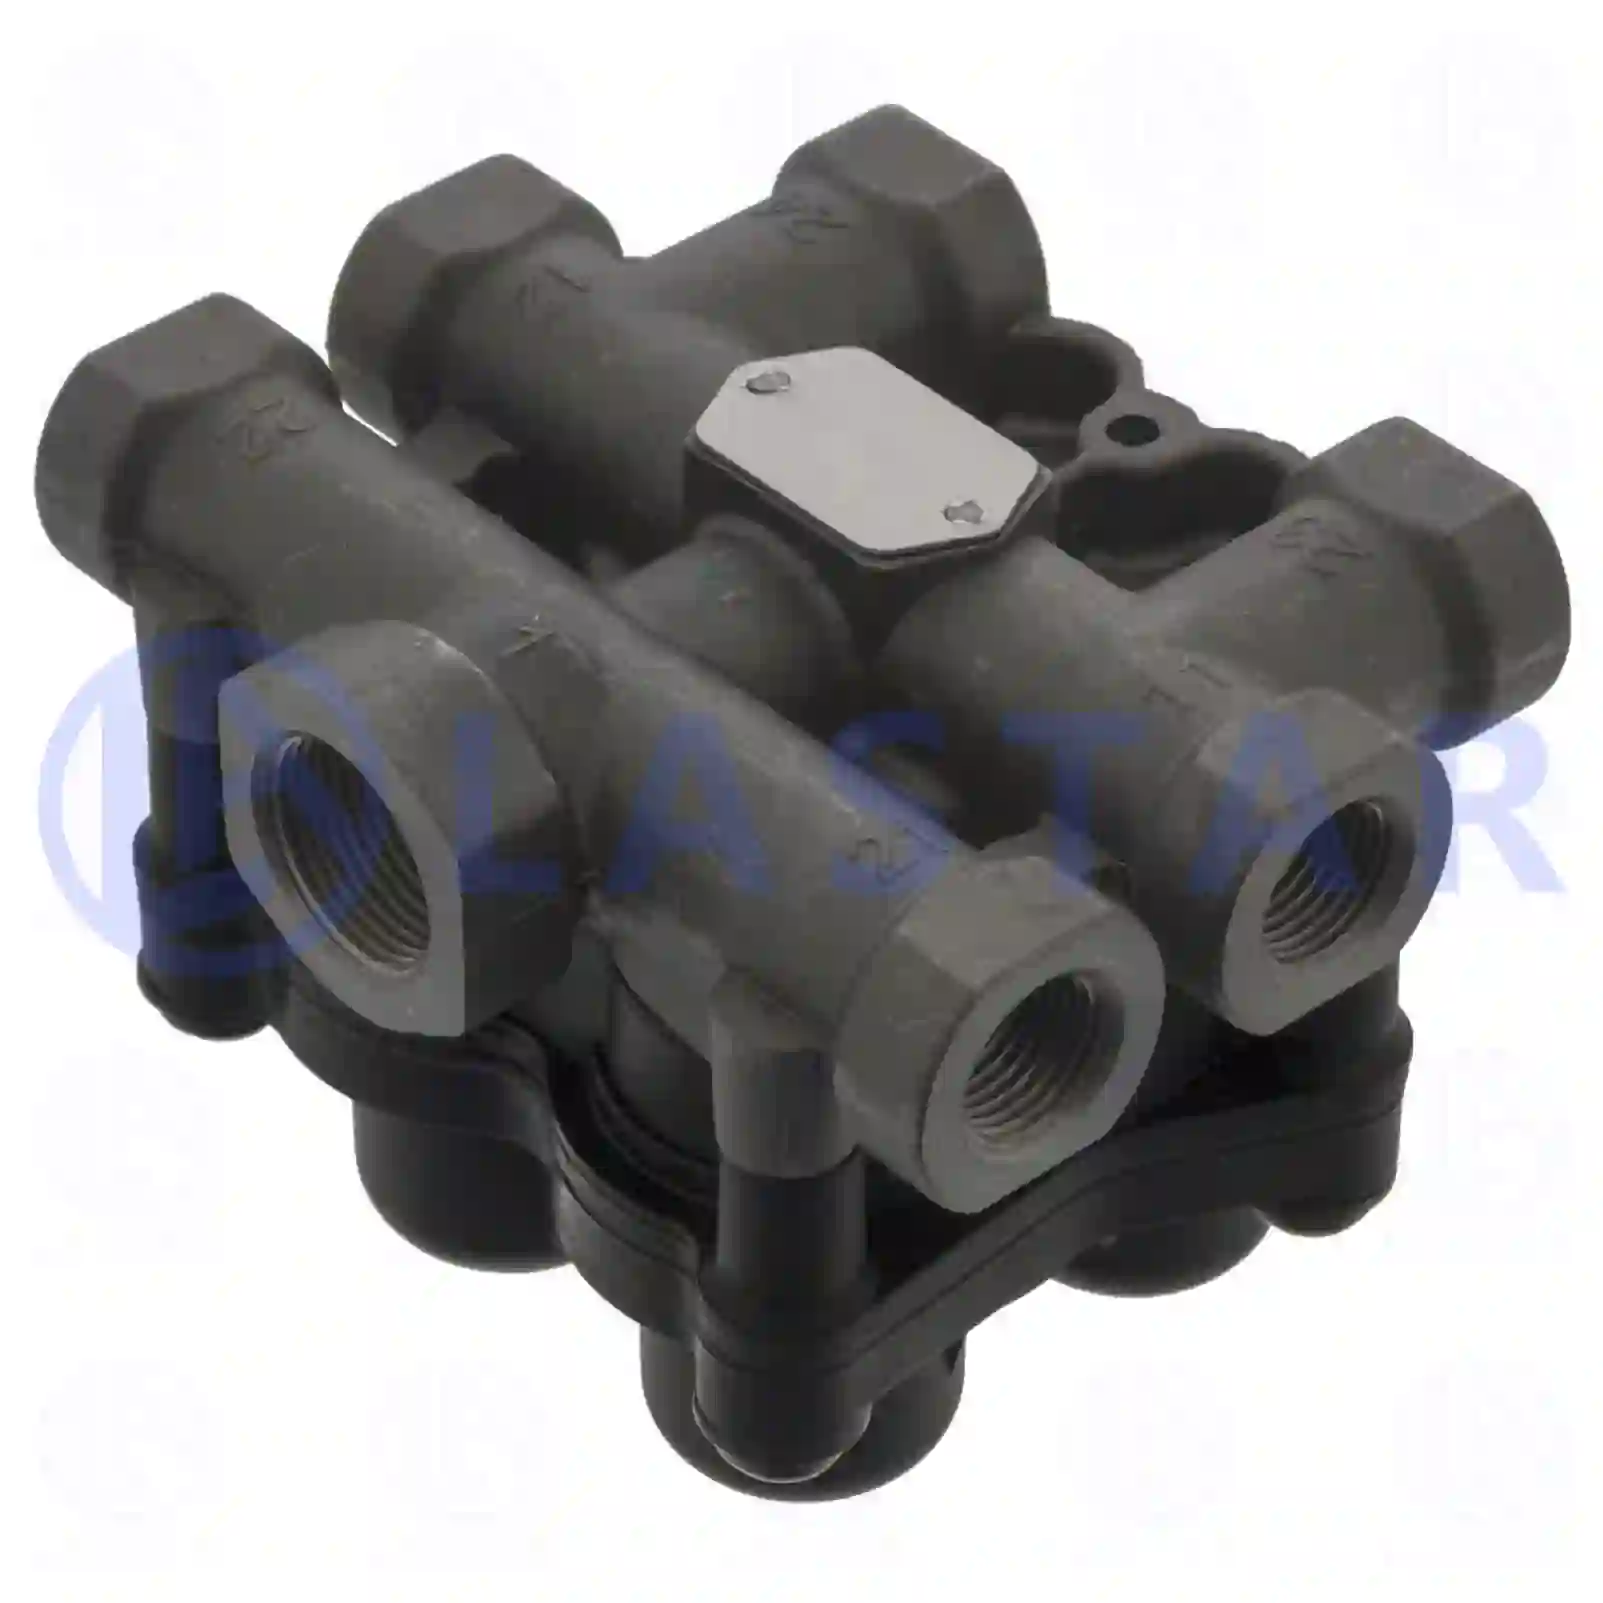 4-circuit-protection valve, 77716459, 3197588, ZG50040-0008, , , , , , , , , ||  77716459 Lastar Spare Part | Truck Spare Parts, Auotomotive Spare Parts 4-circuit-protection valve, 77716459, 3197588, ZG50040-0008, , , , , , , , , ||  77716459 Lastar Spare Part | Truck Spare Parts, Auotomotive Spare Parts